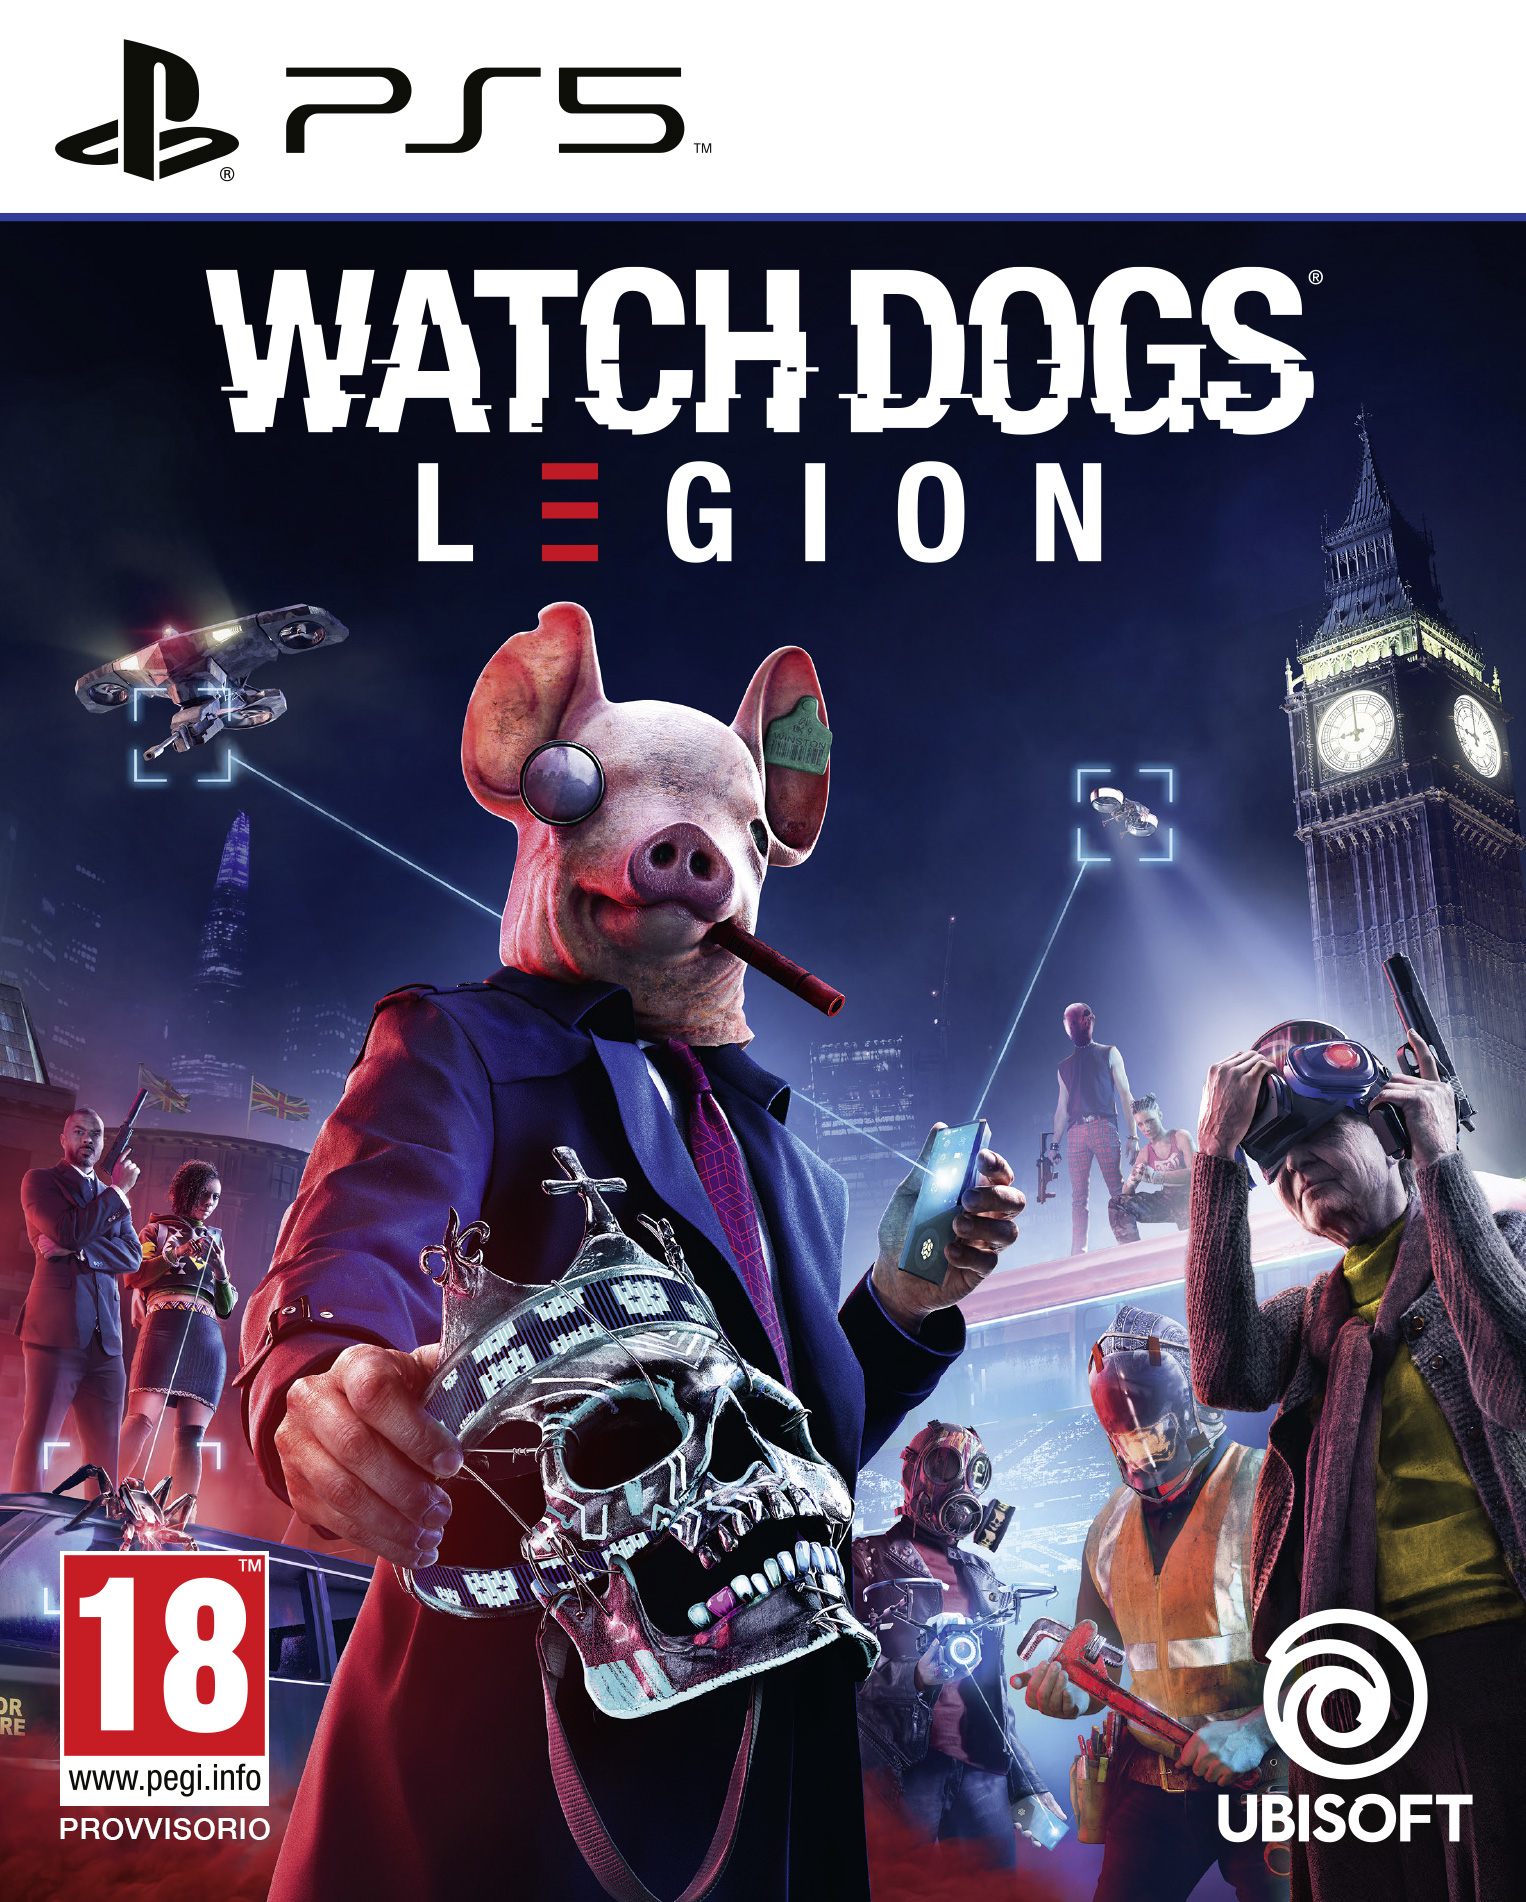 Videogioco Ubisoft Watch Dogs Legion, PS5 Standard Inglese, ITA PlayStation 5 [300117110]